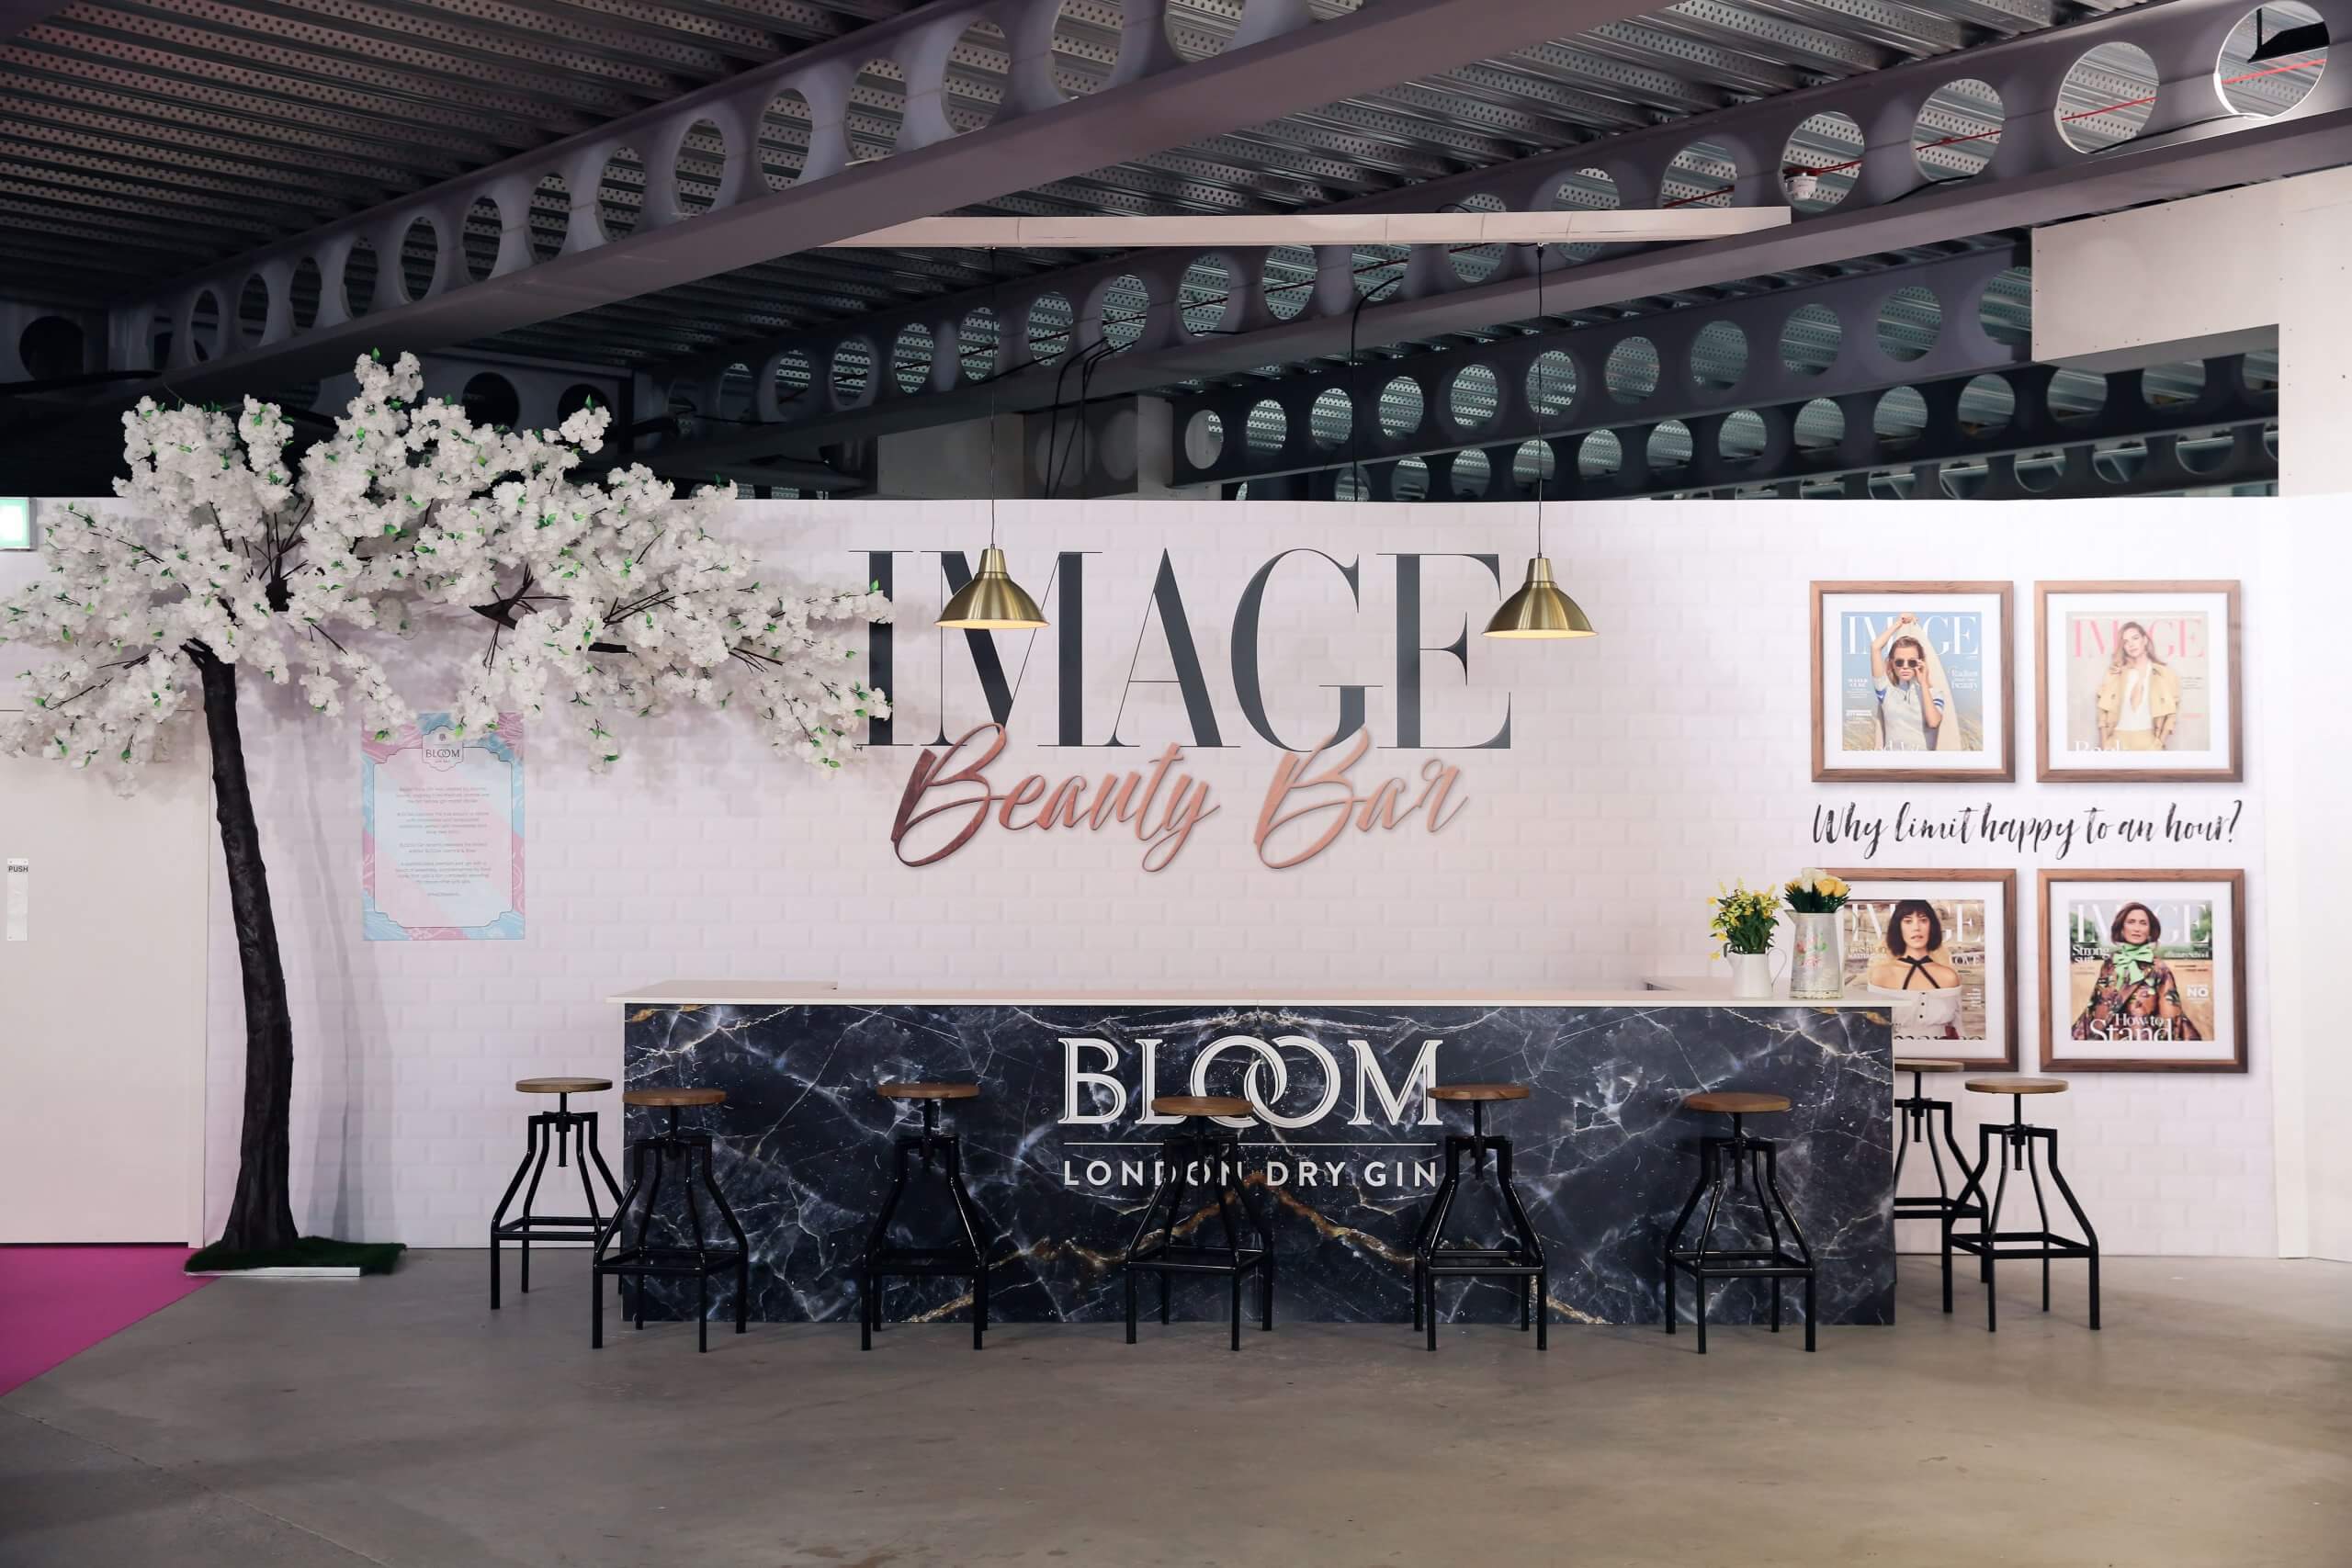 Bloom Gin @ IMAGE Beauty Festival